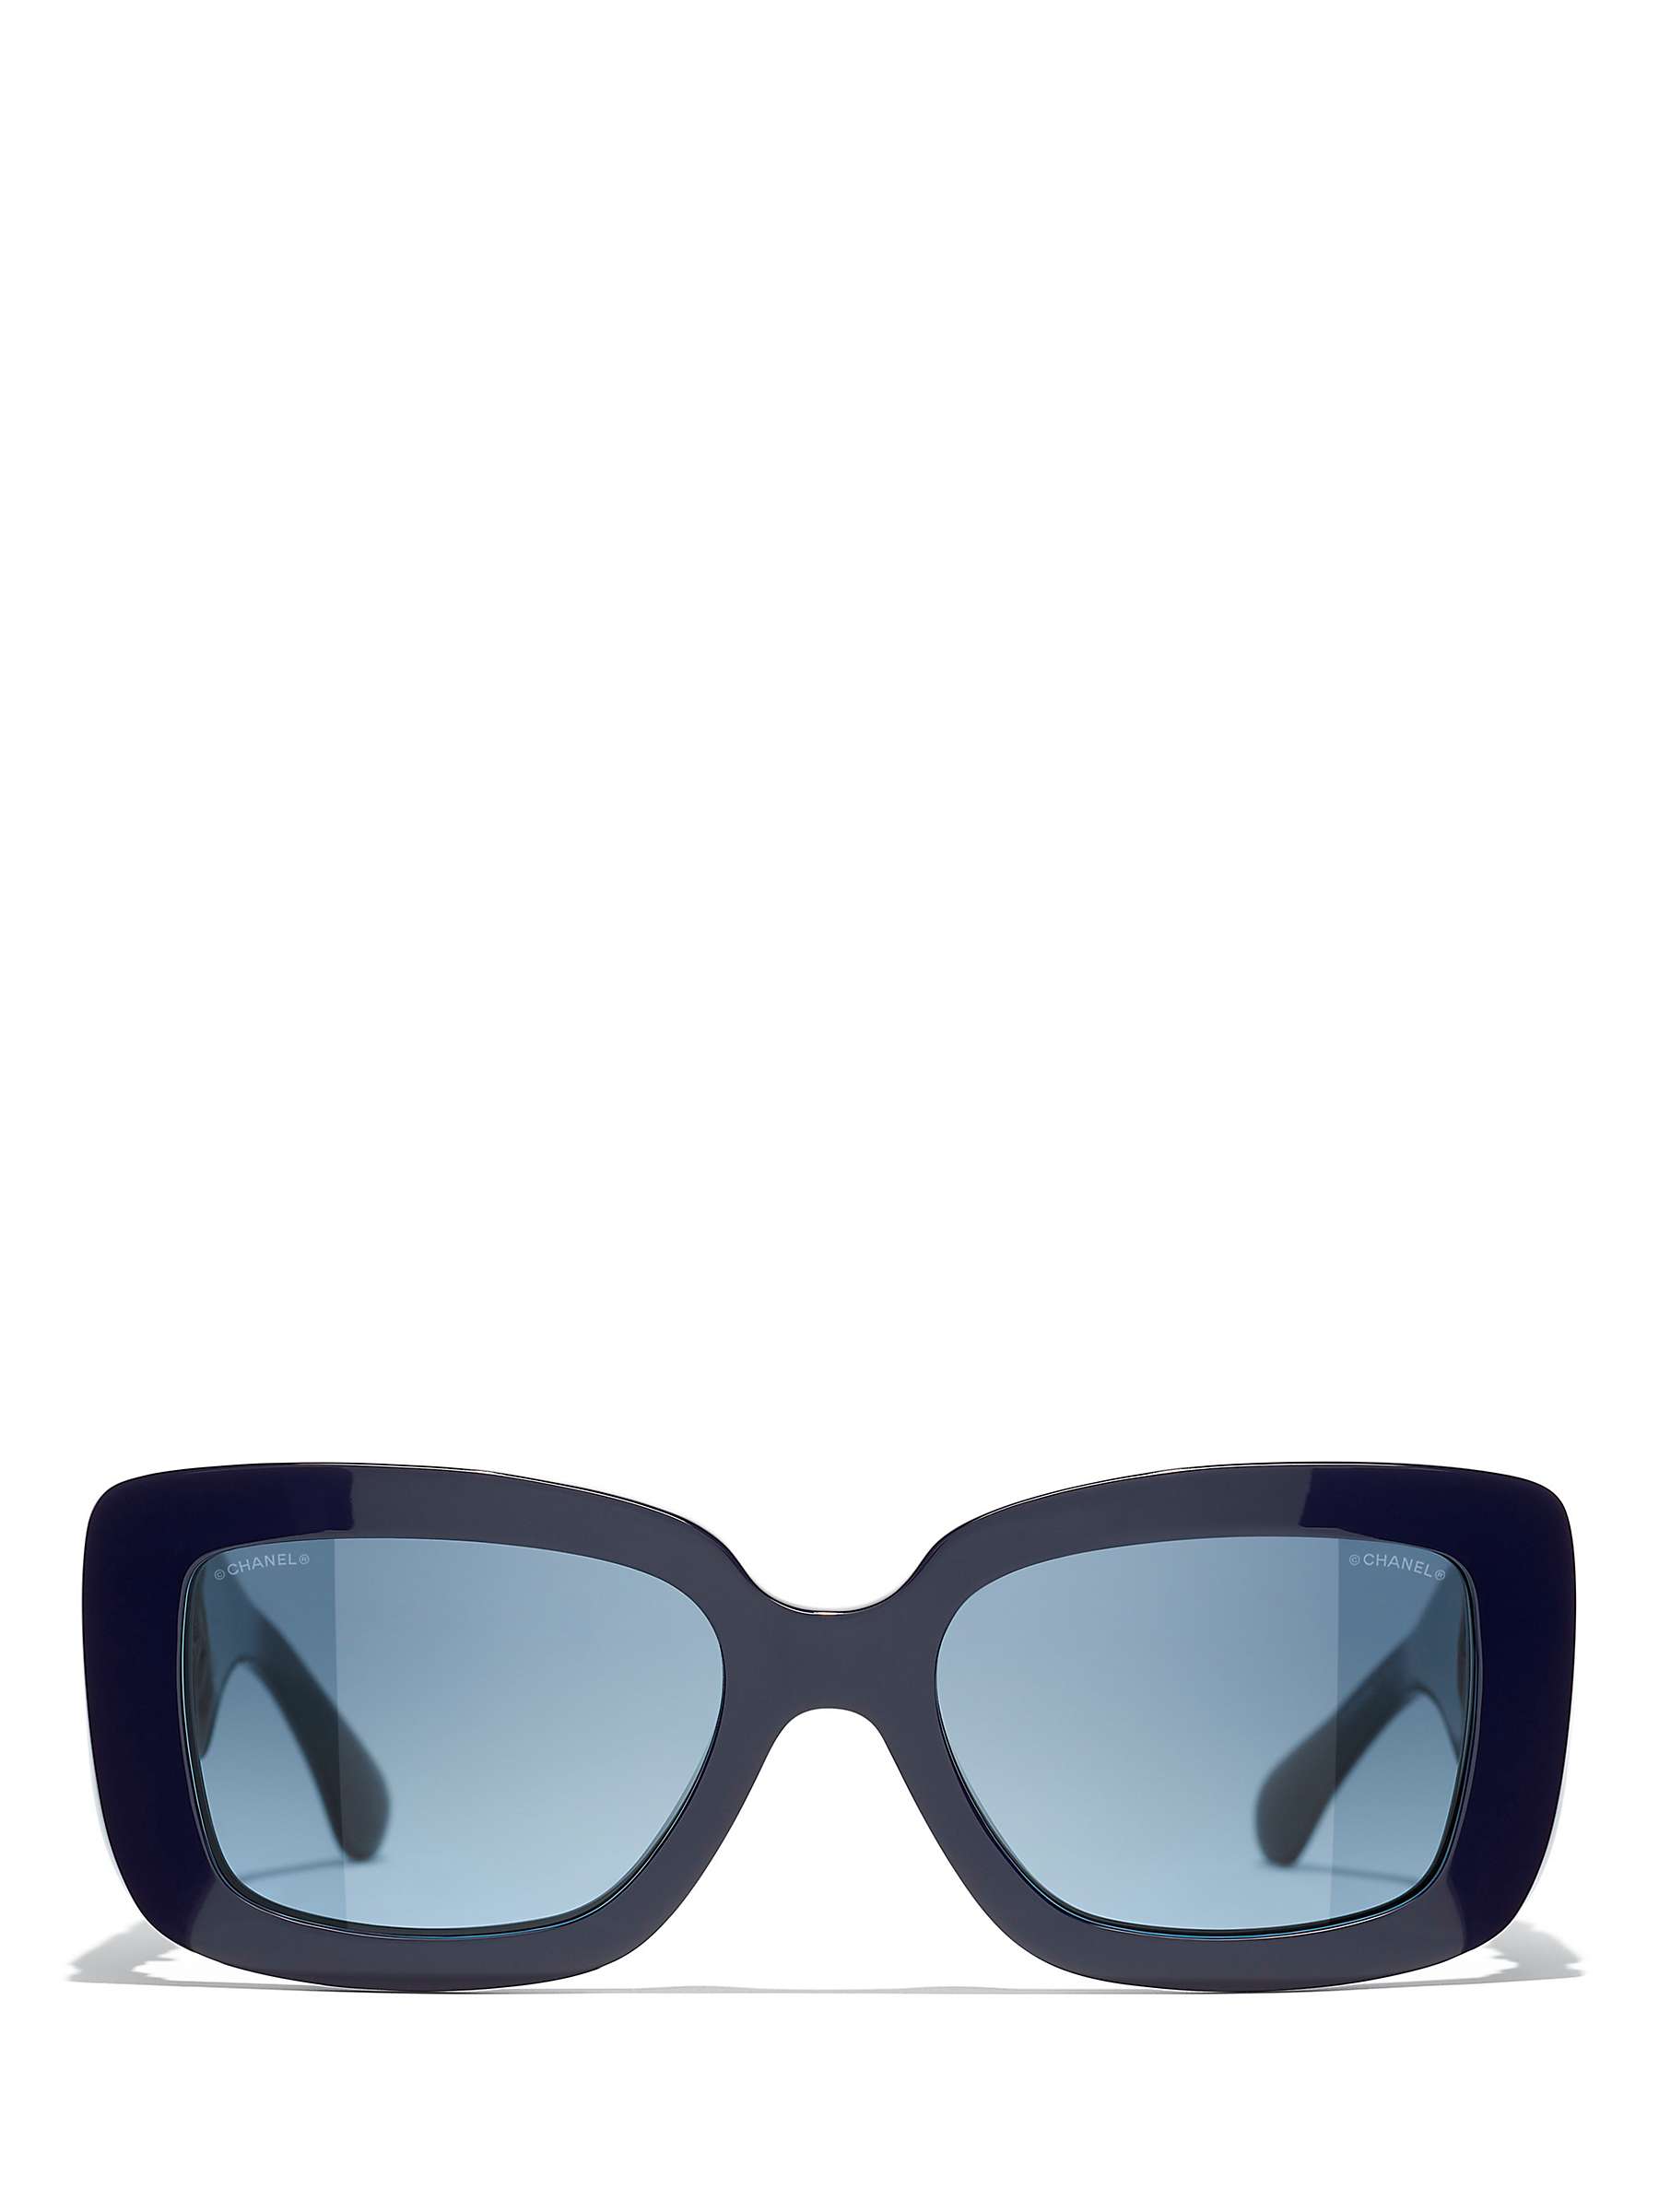 Chanel Rectangle Sunglasses 1462S2 Dark Blue